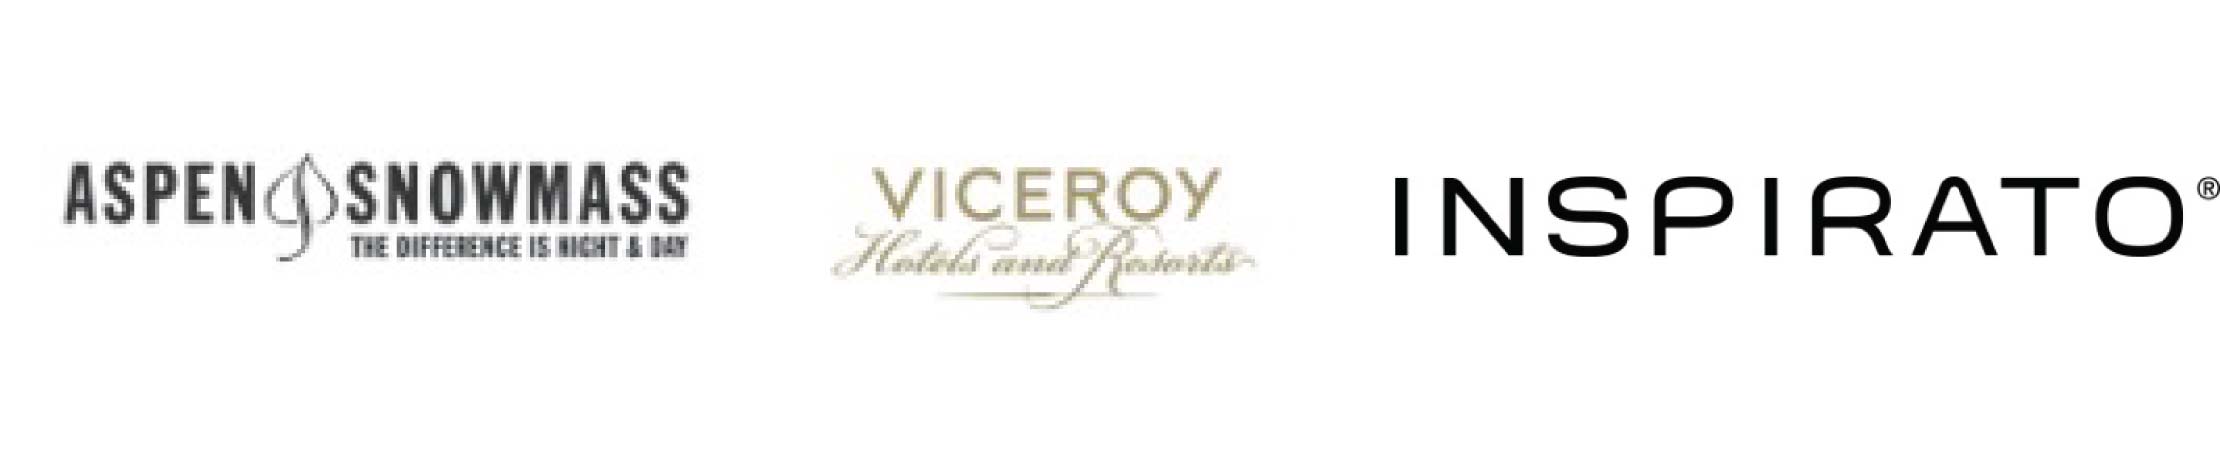 Logos for AspenSnowmass, Viceroy Hotels and Resorts and Inspirito